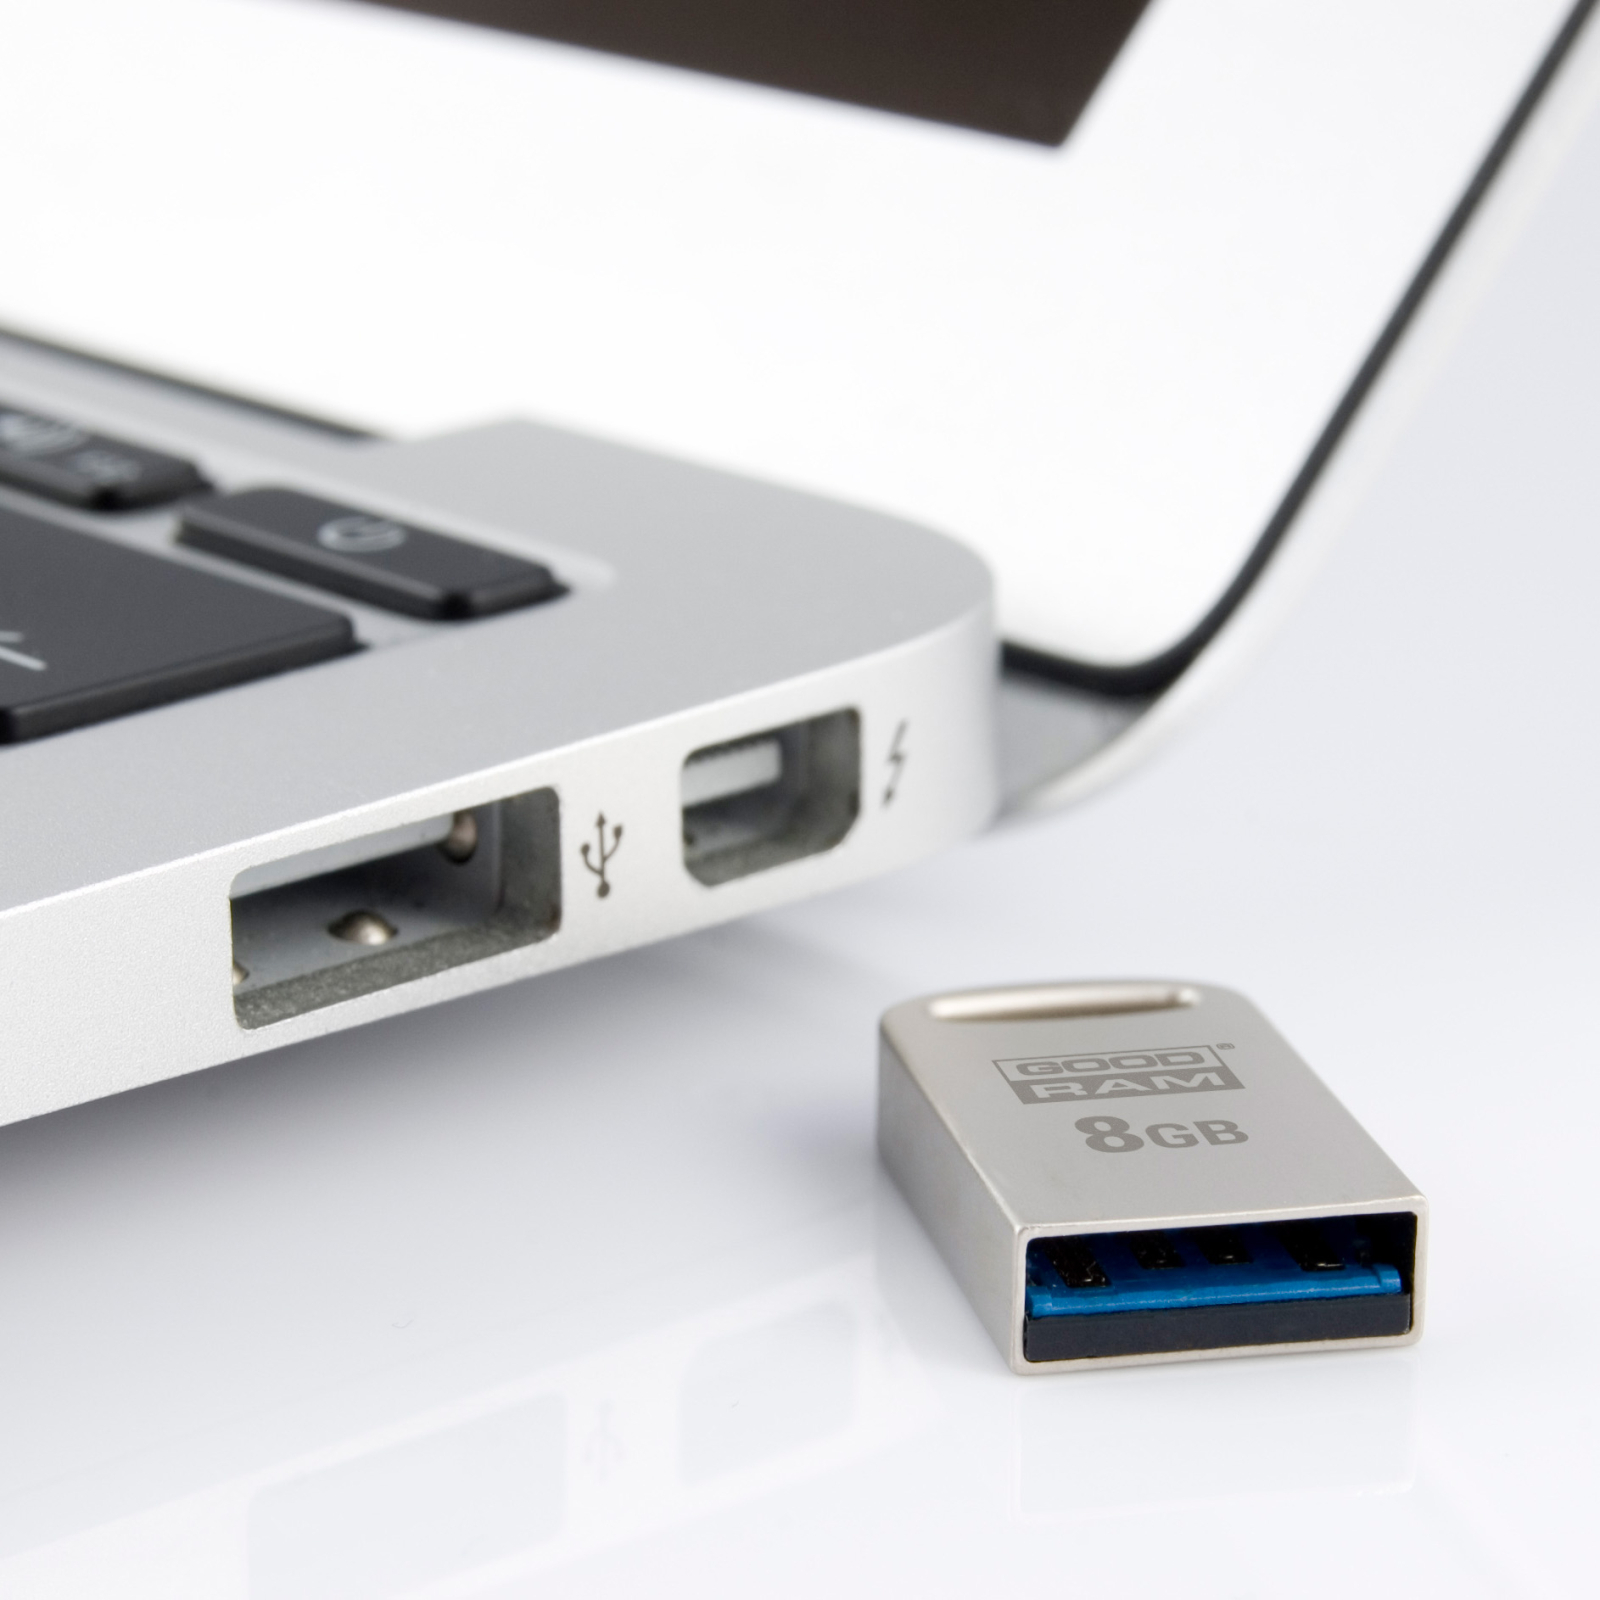 USB флеш накопитель Goodram 16GB Point Silver USB 3.0 (UPO3-0160S0R11) изображение 2